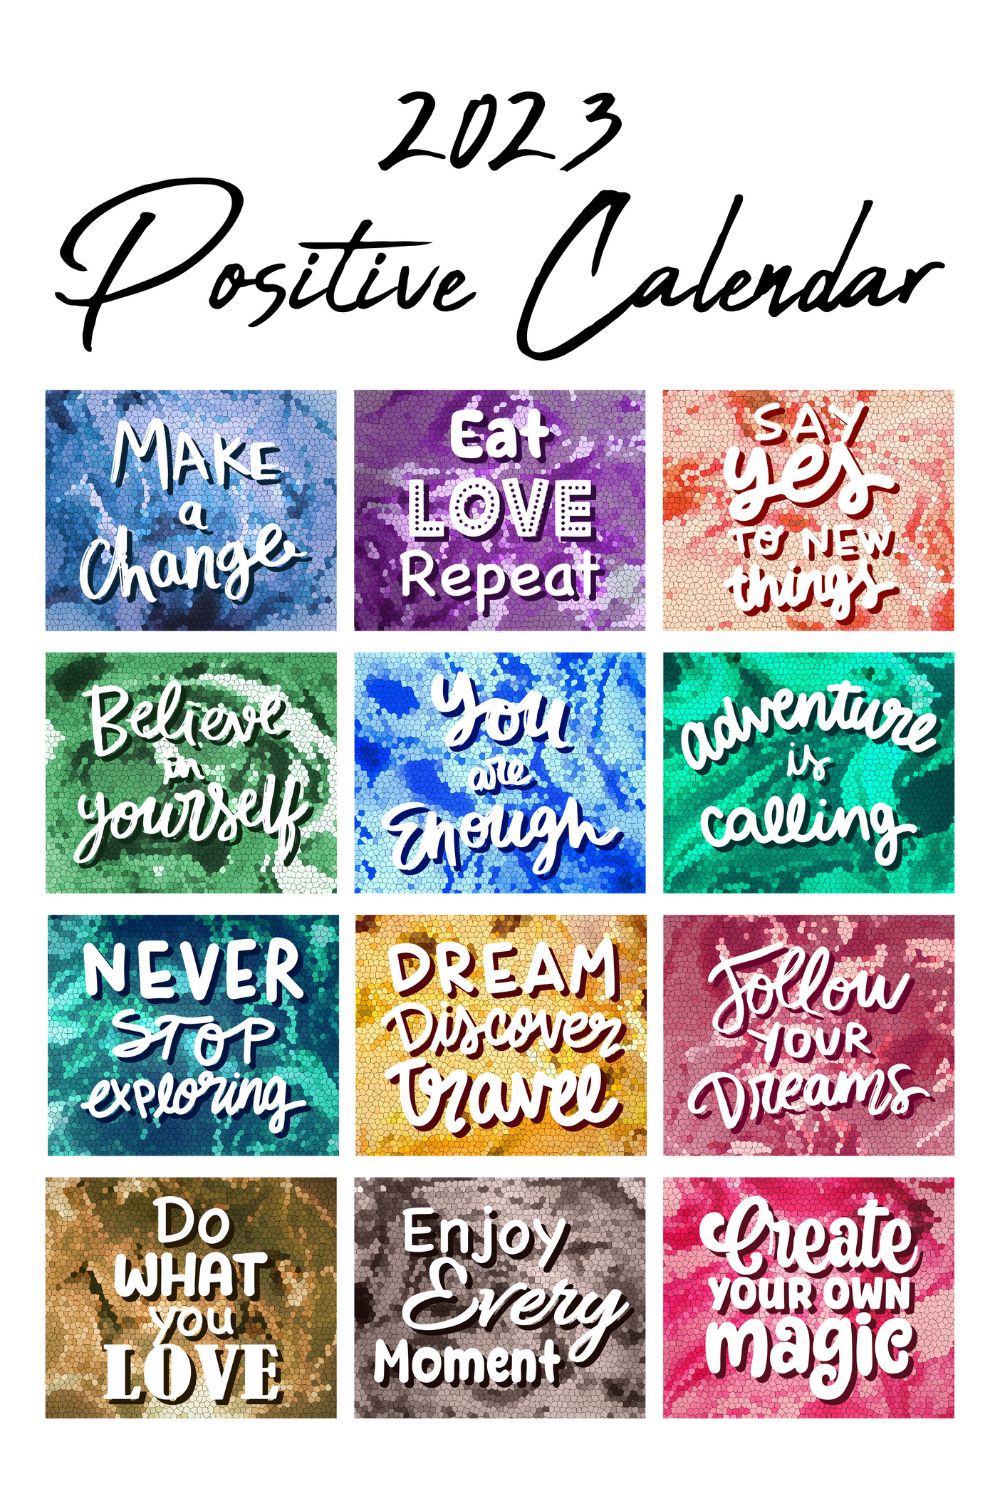 Wall Calendar Motivational Quotes pinterest image.